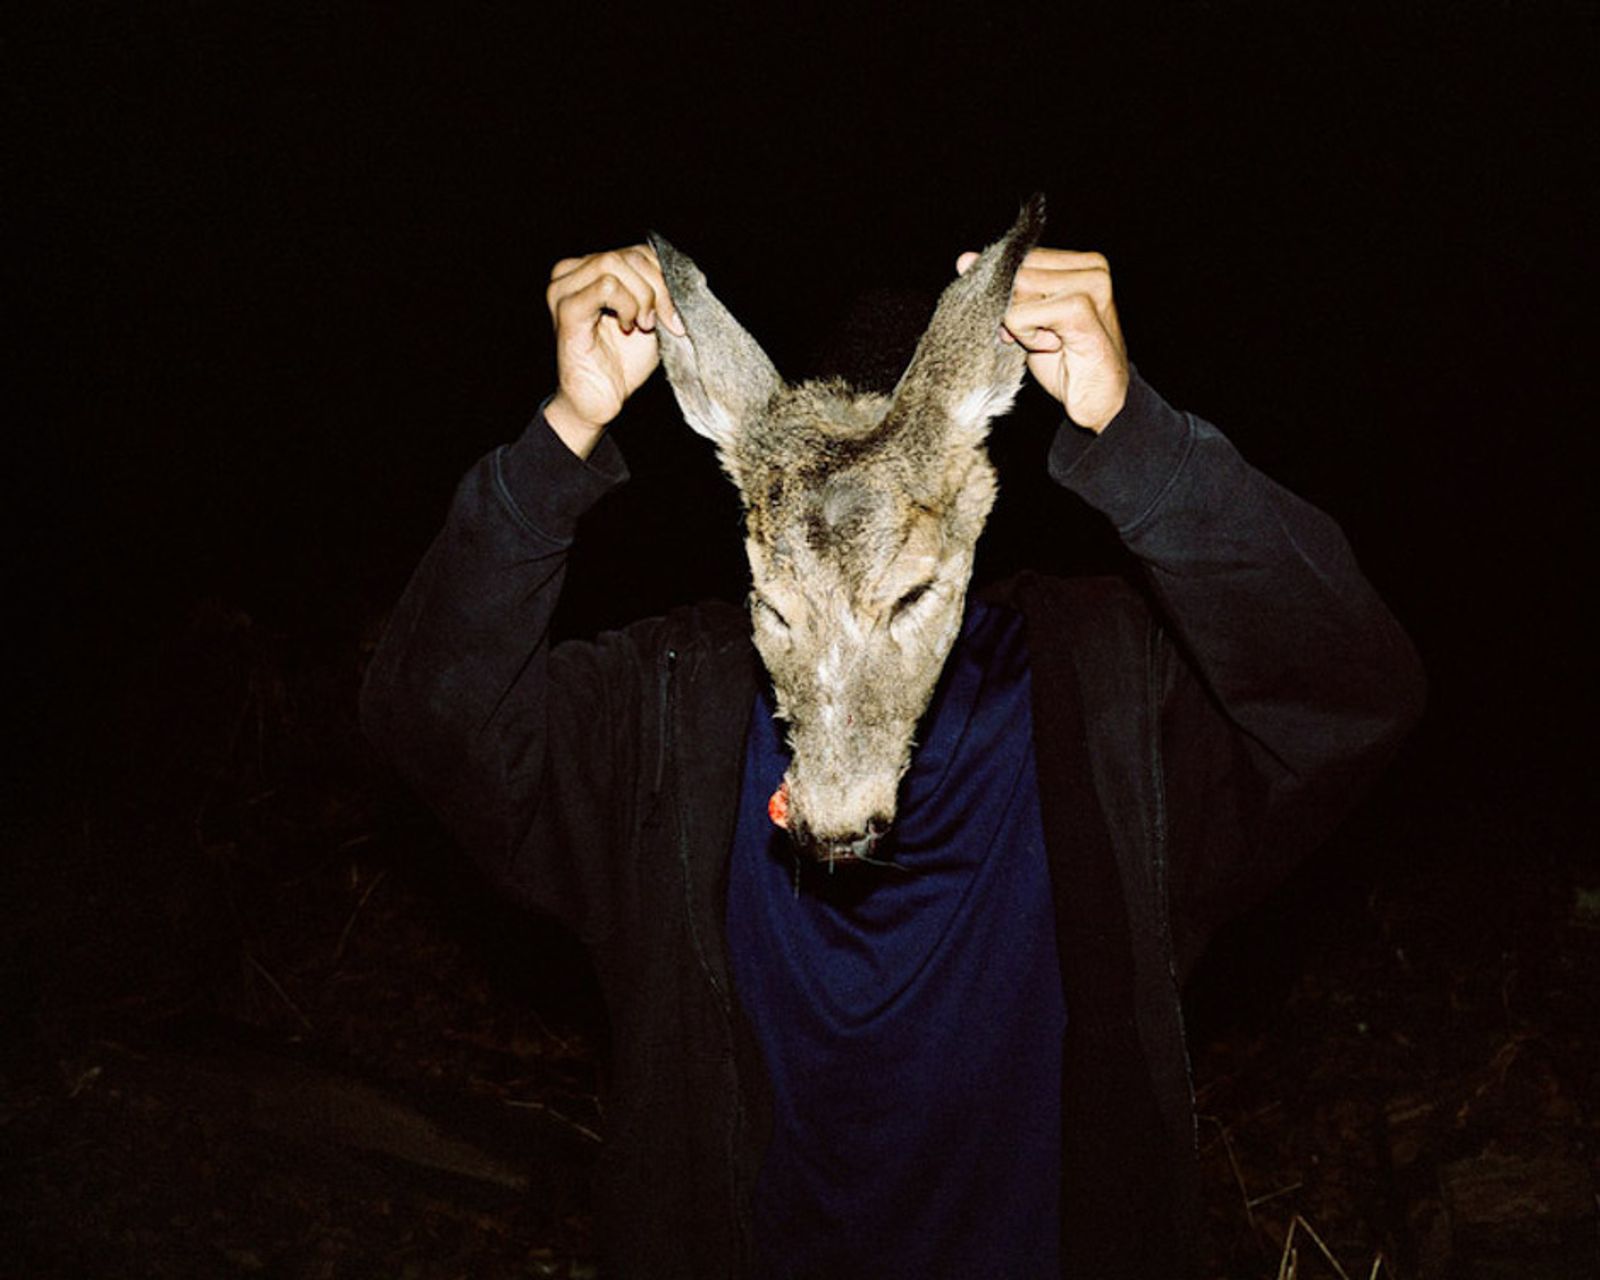 © Nathanael Turner - Daniel holding the head of a deer